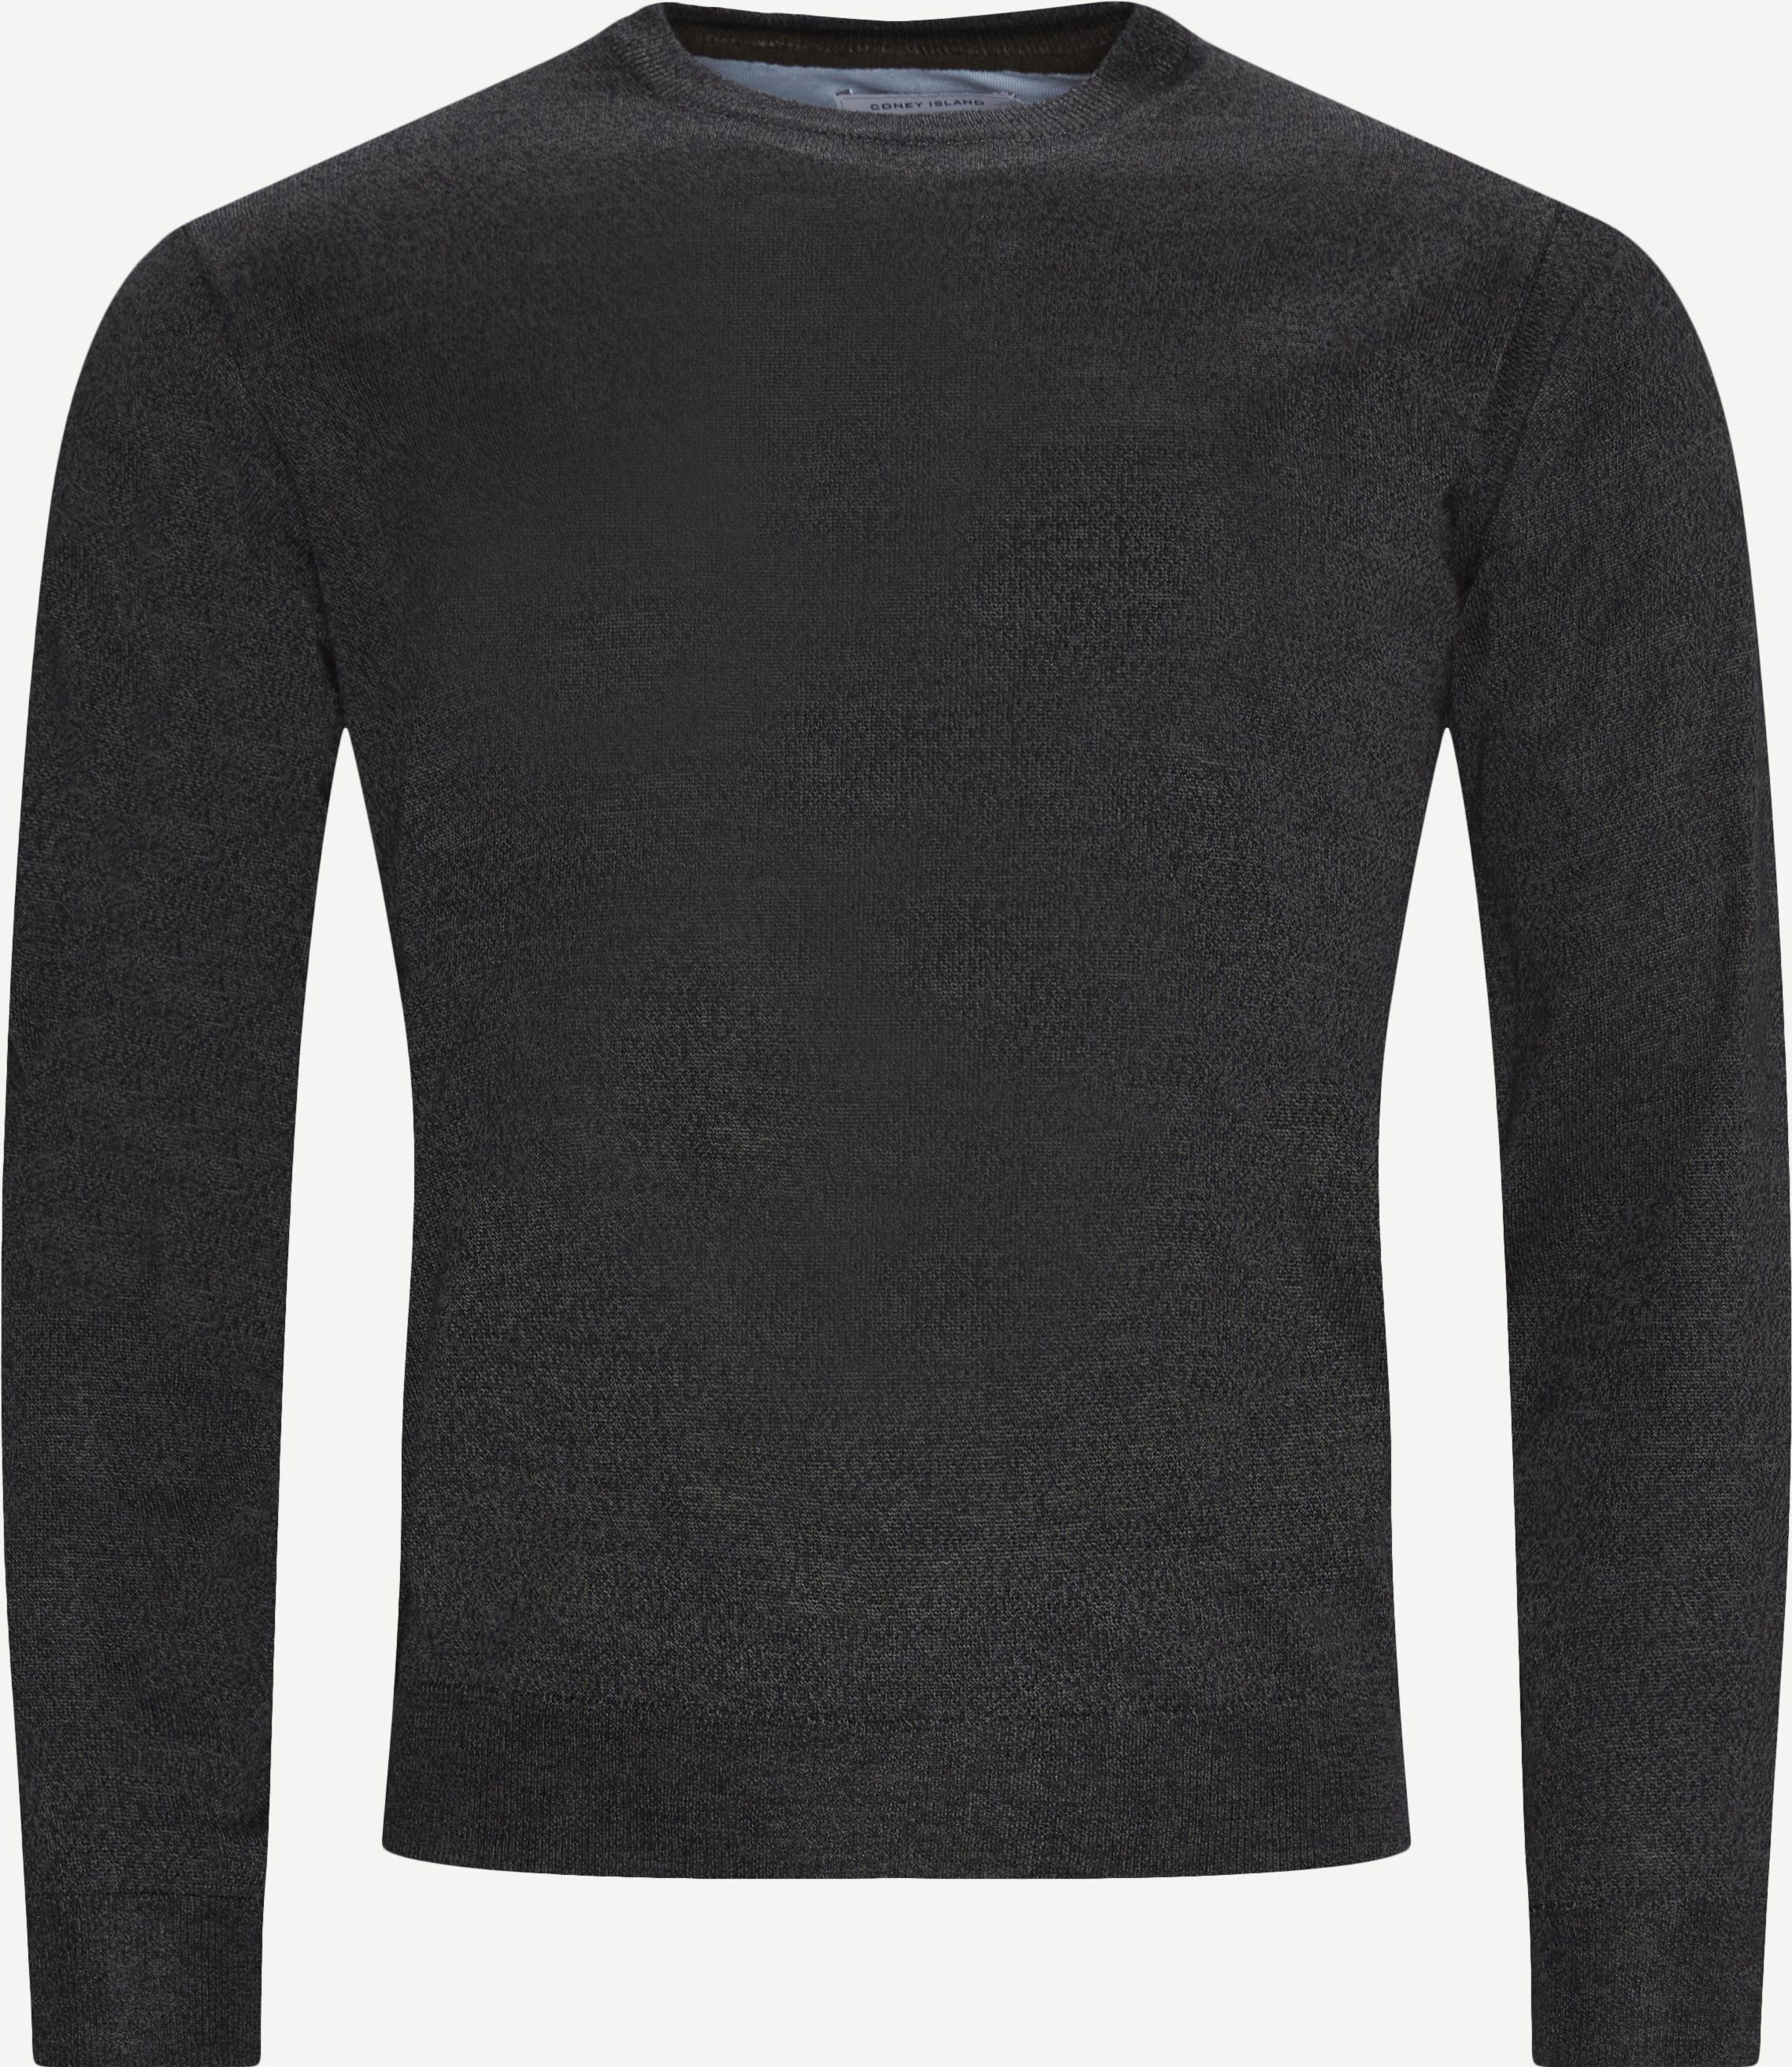 Lipan Merino knitted sweater - Knitwear - Regular fit - Grey